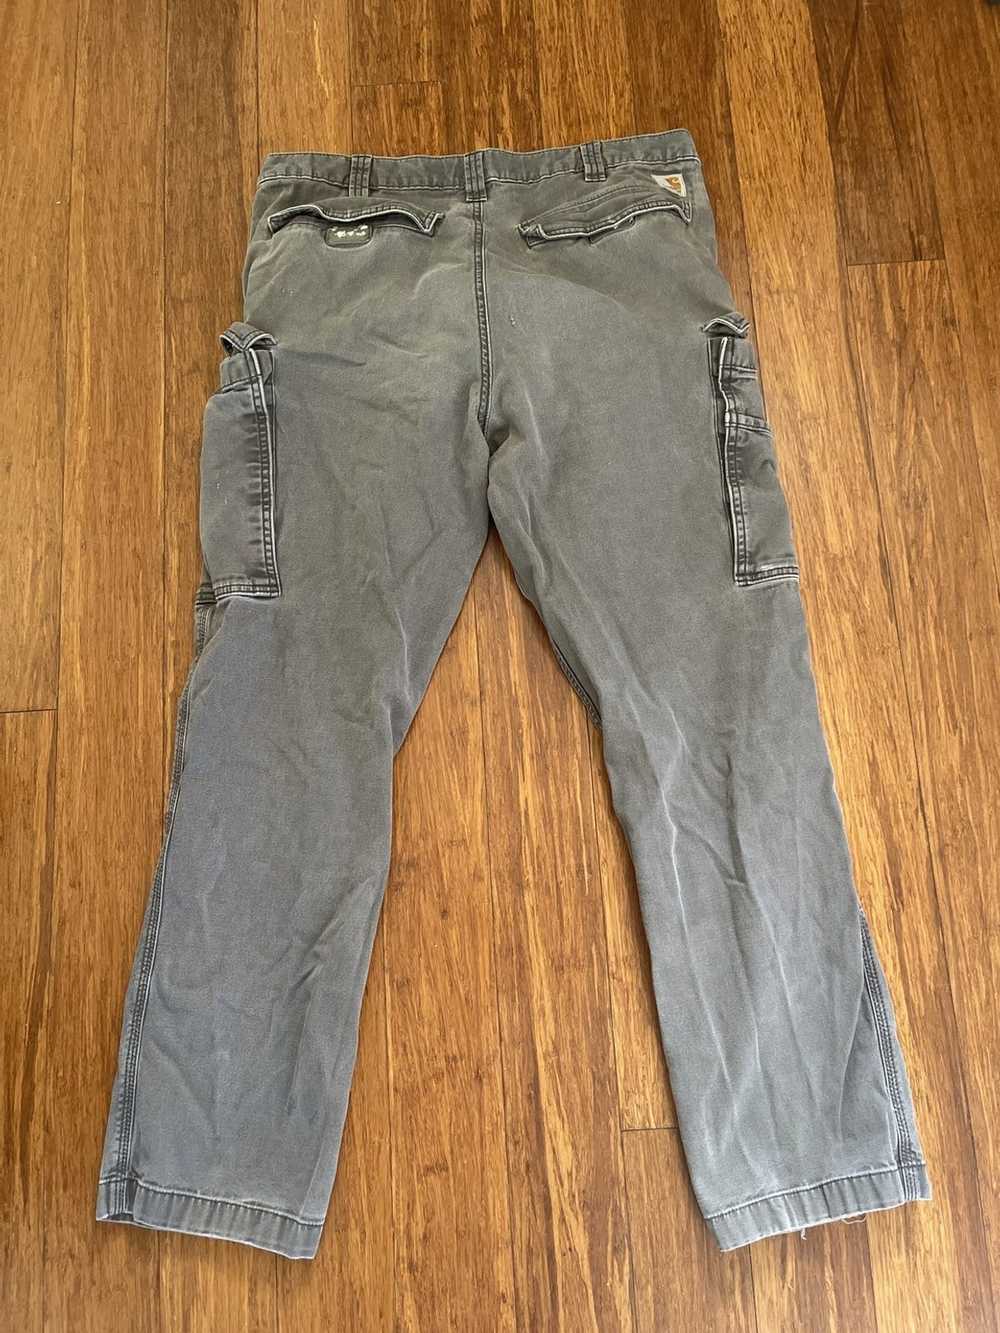 Carhartt Distressed Grey Carhartt Cargo Pants - image 8